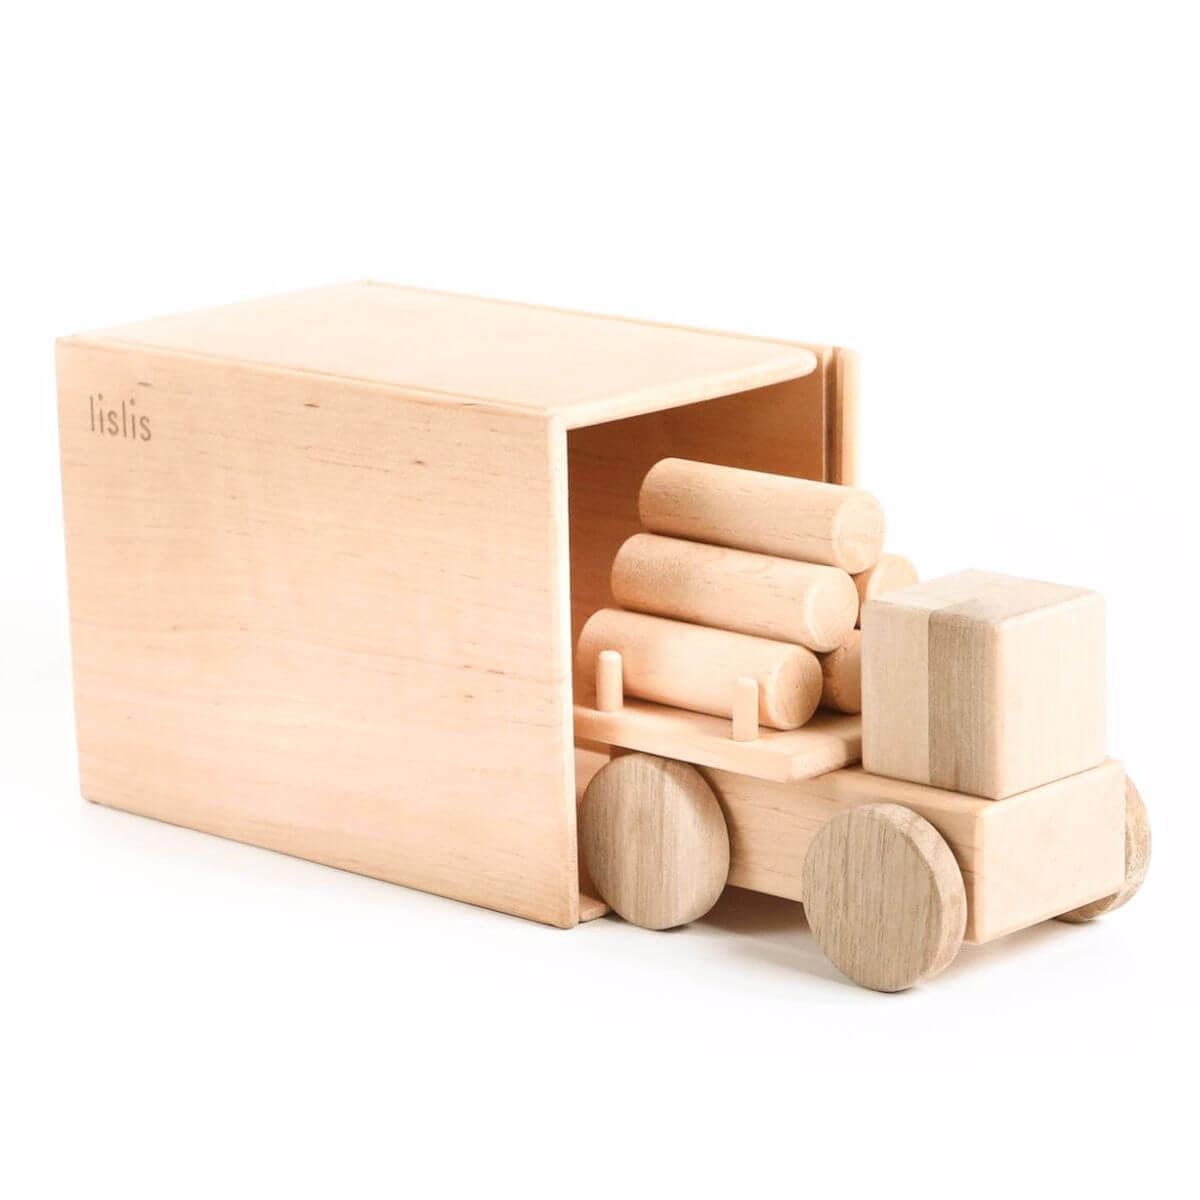 wooden-logging-truck-toy-lislis